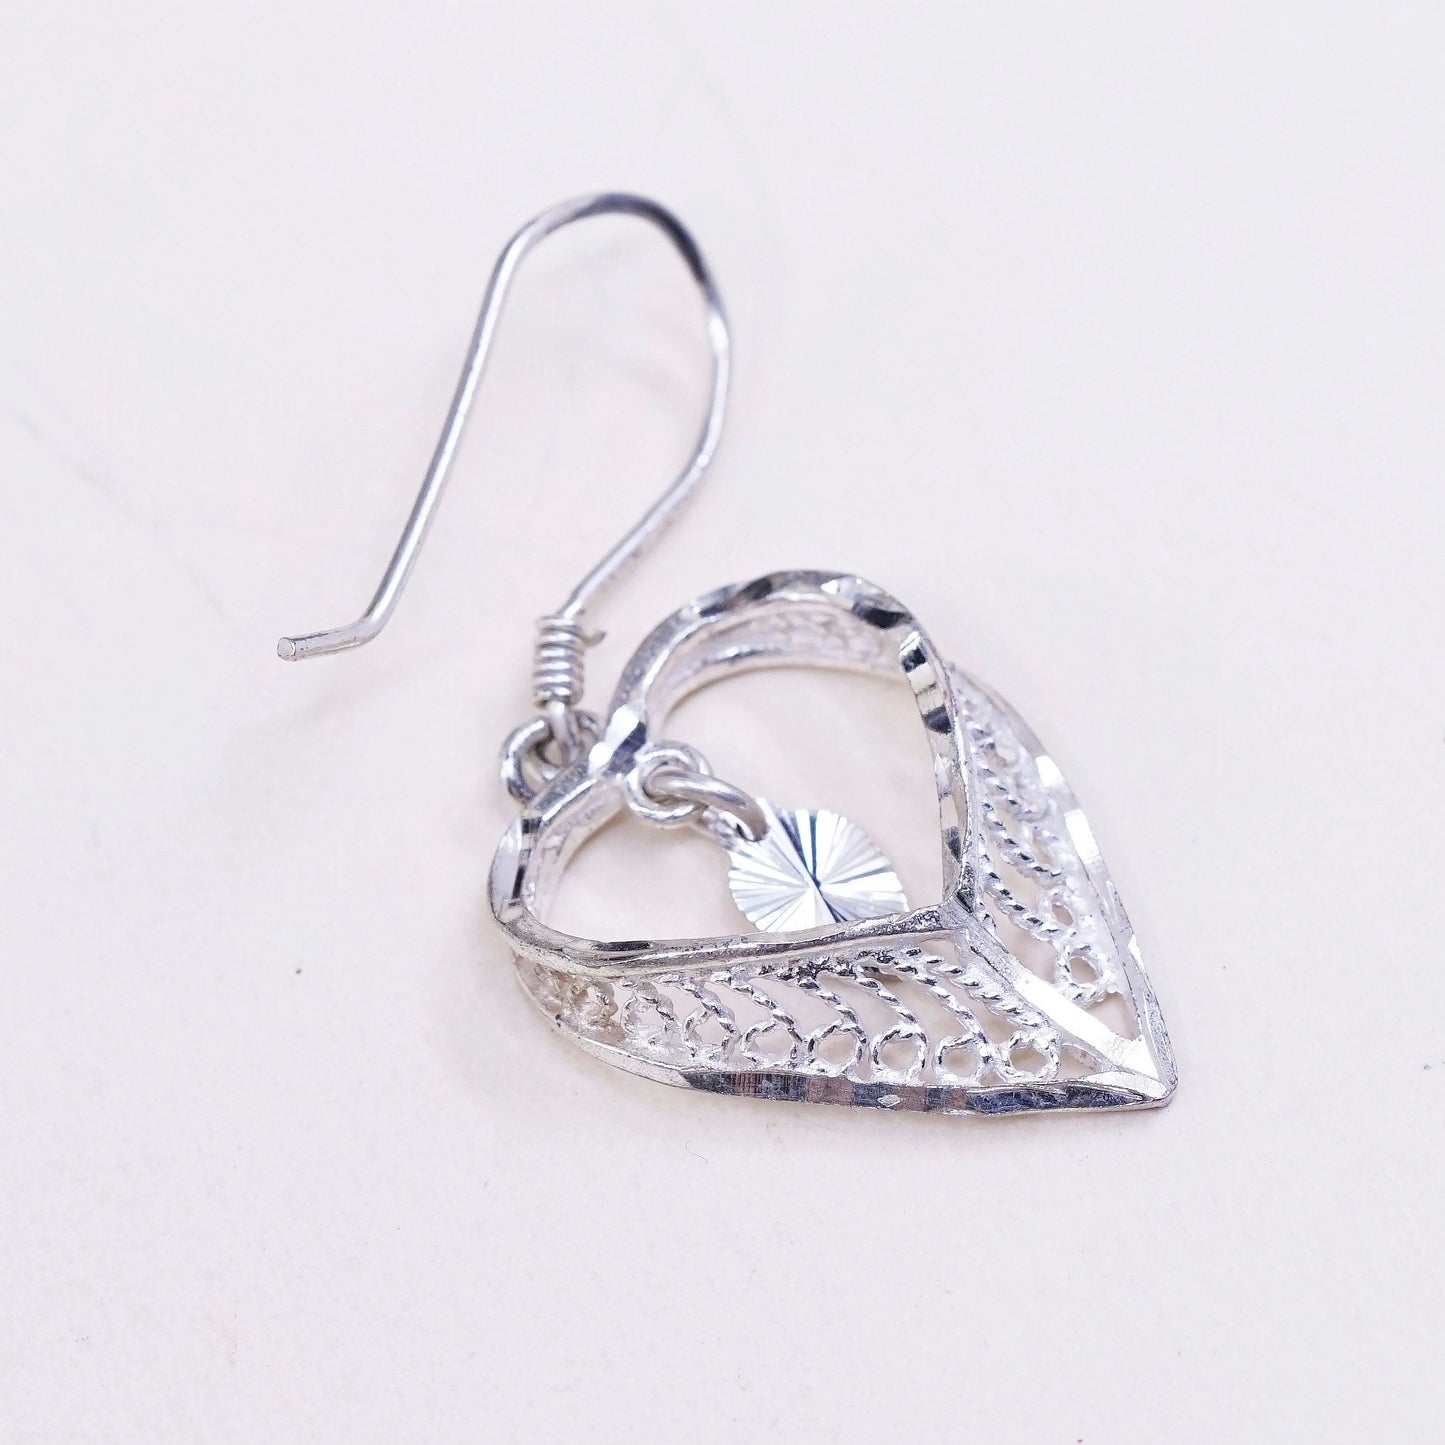 Vintage sterling silver handmade earrings 925 filigree heart